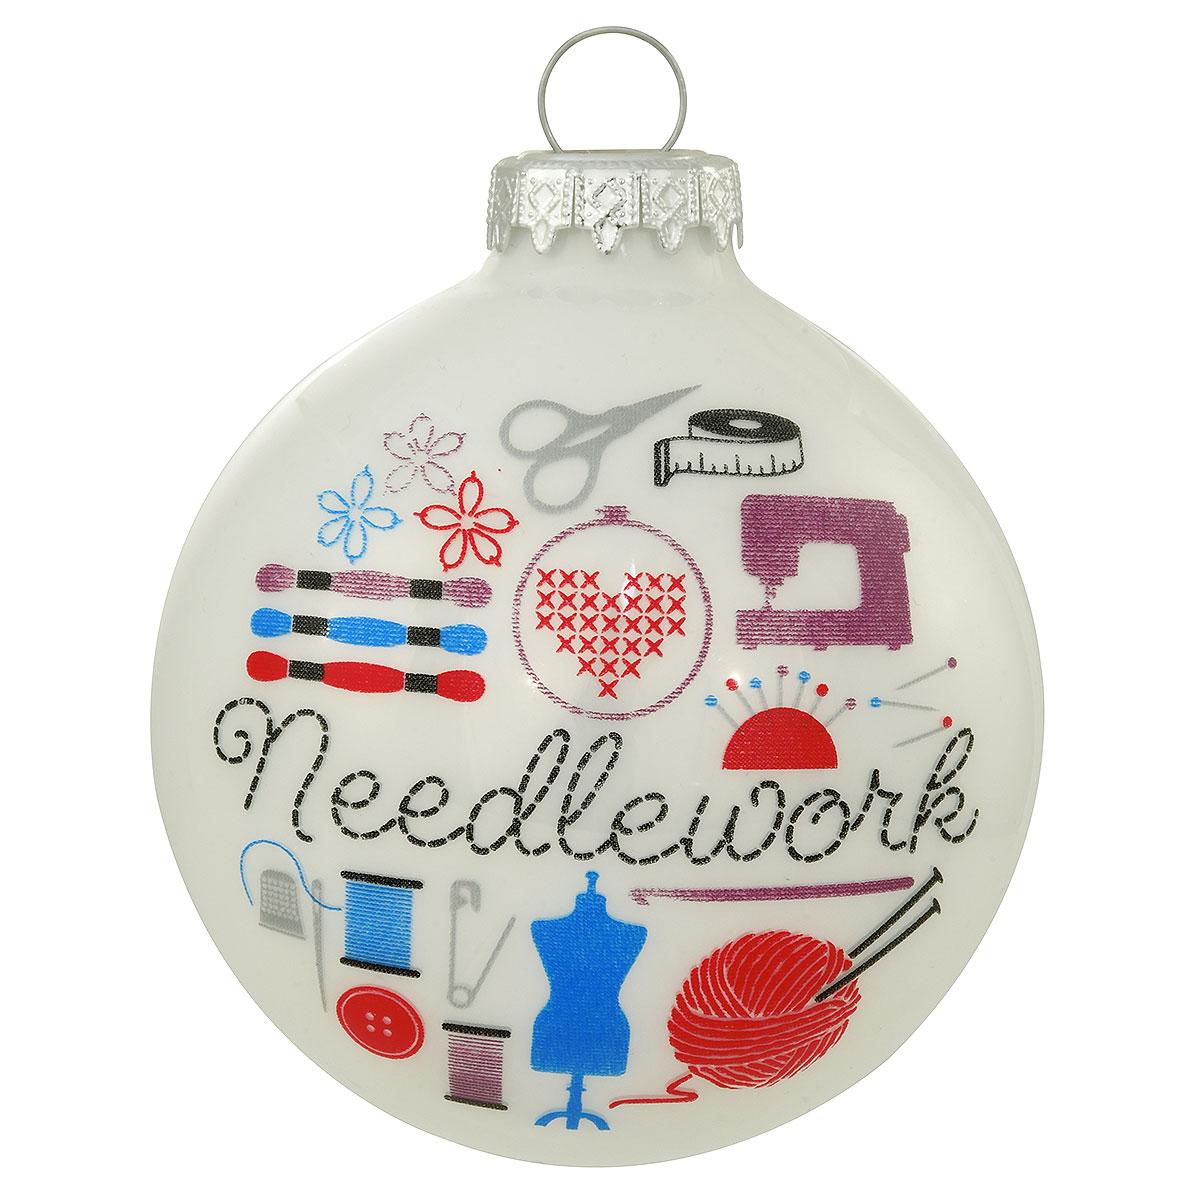 Needlework Glass Ornament